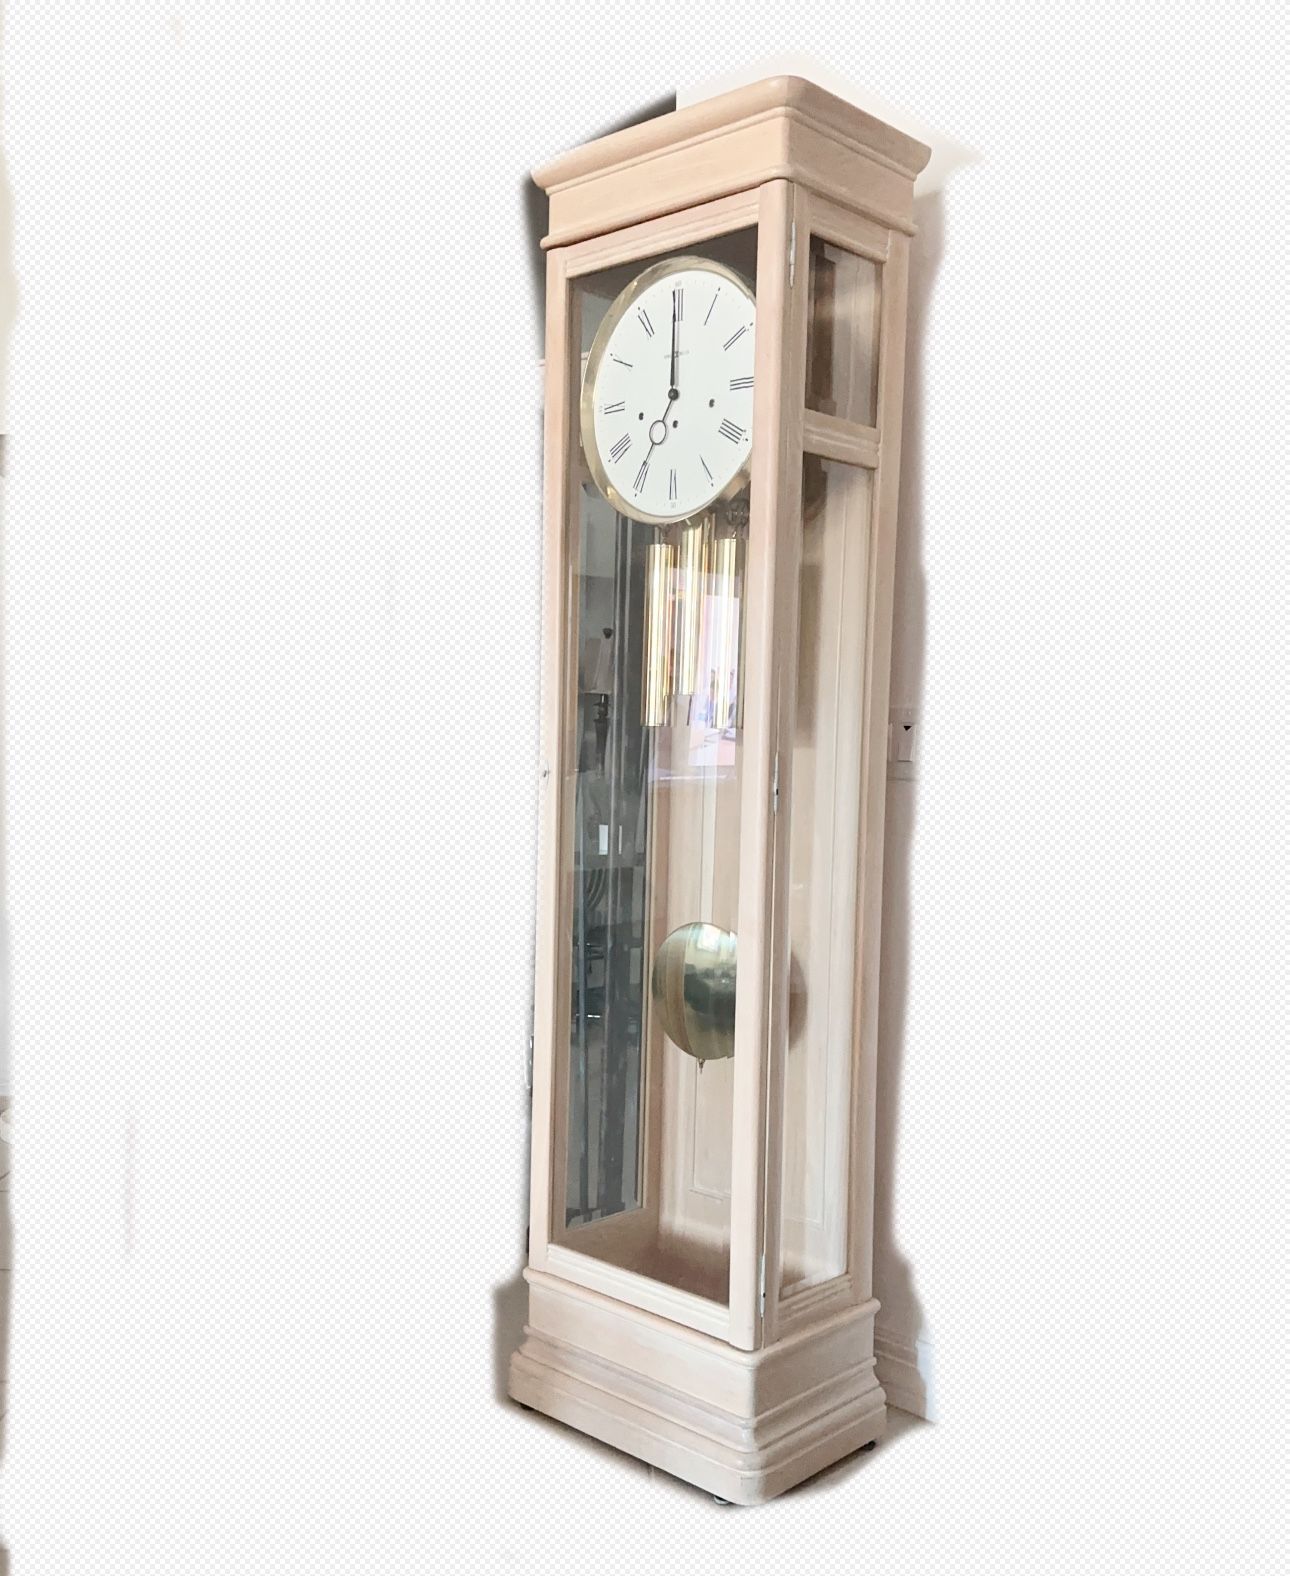 Grandfather Clock - $100